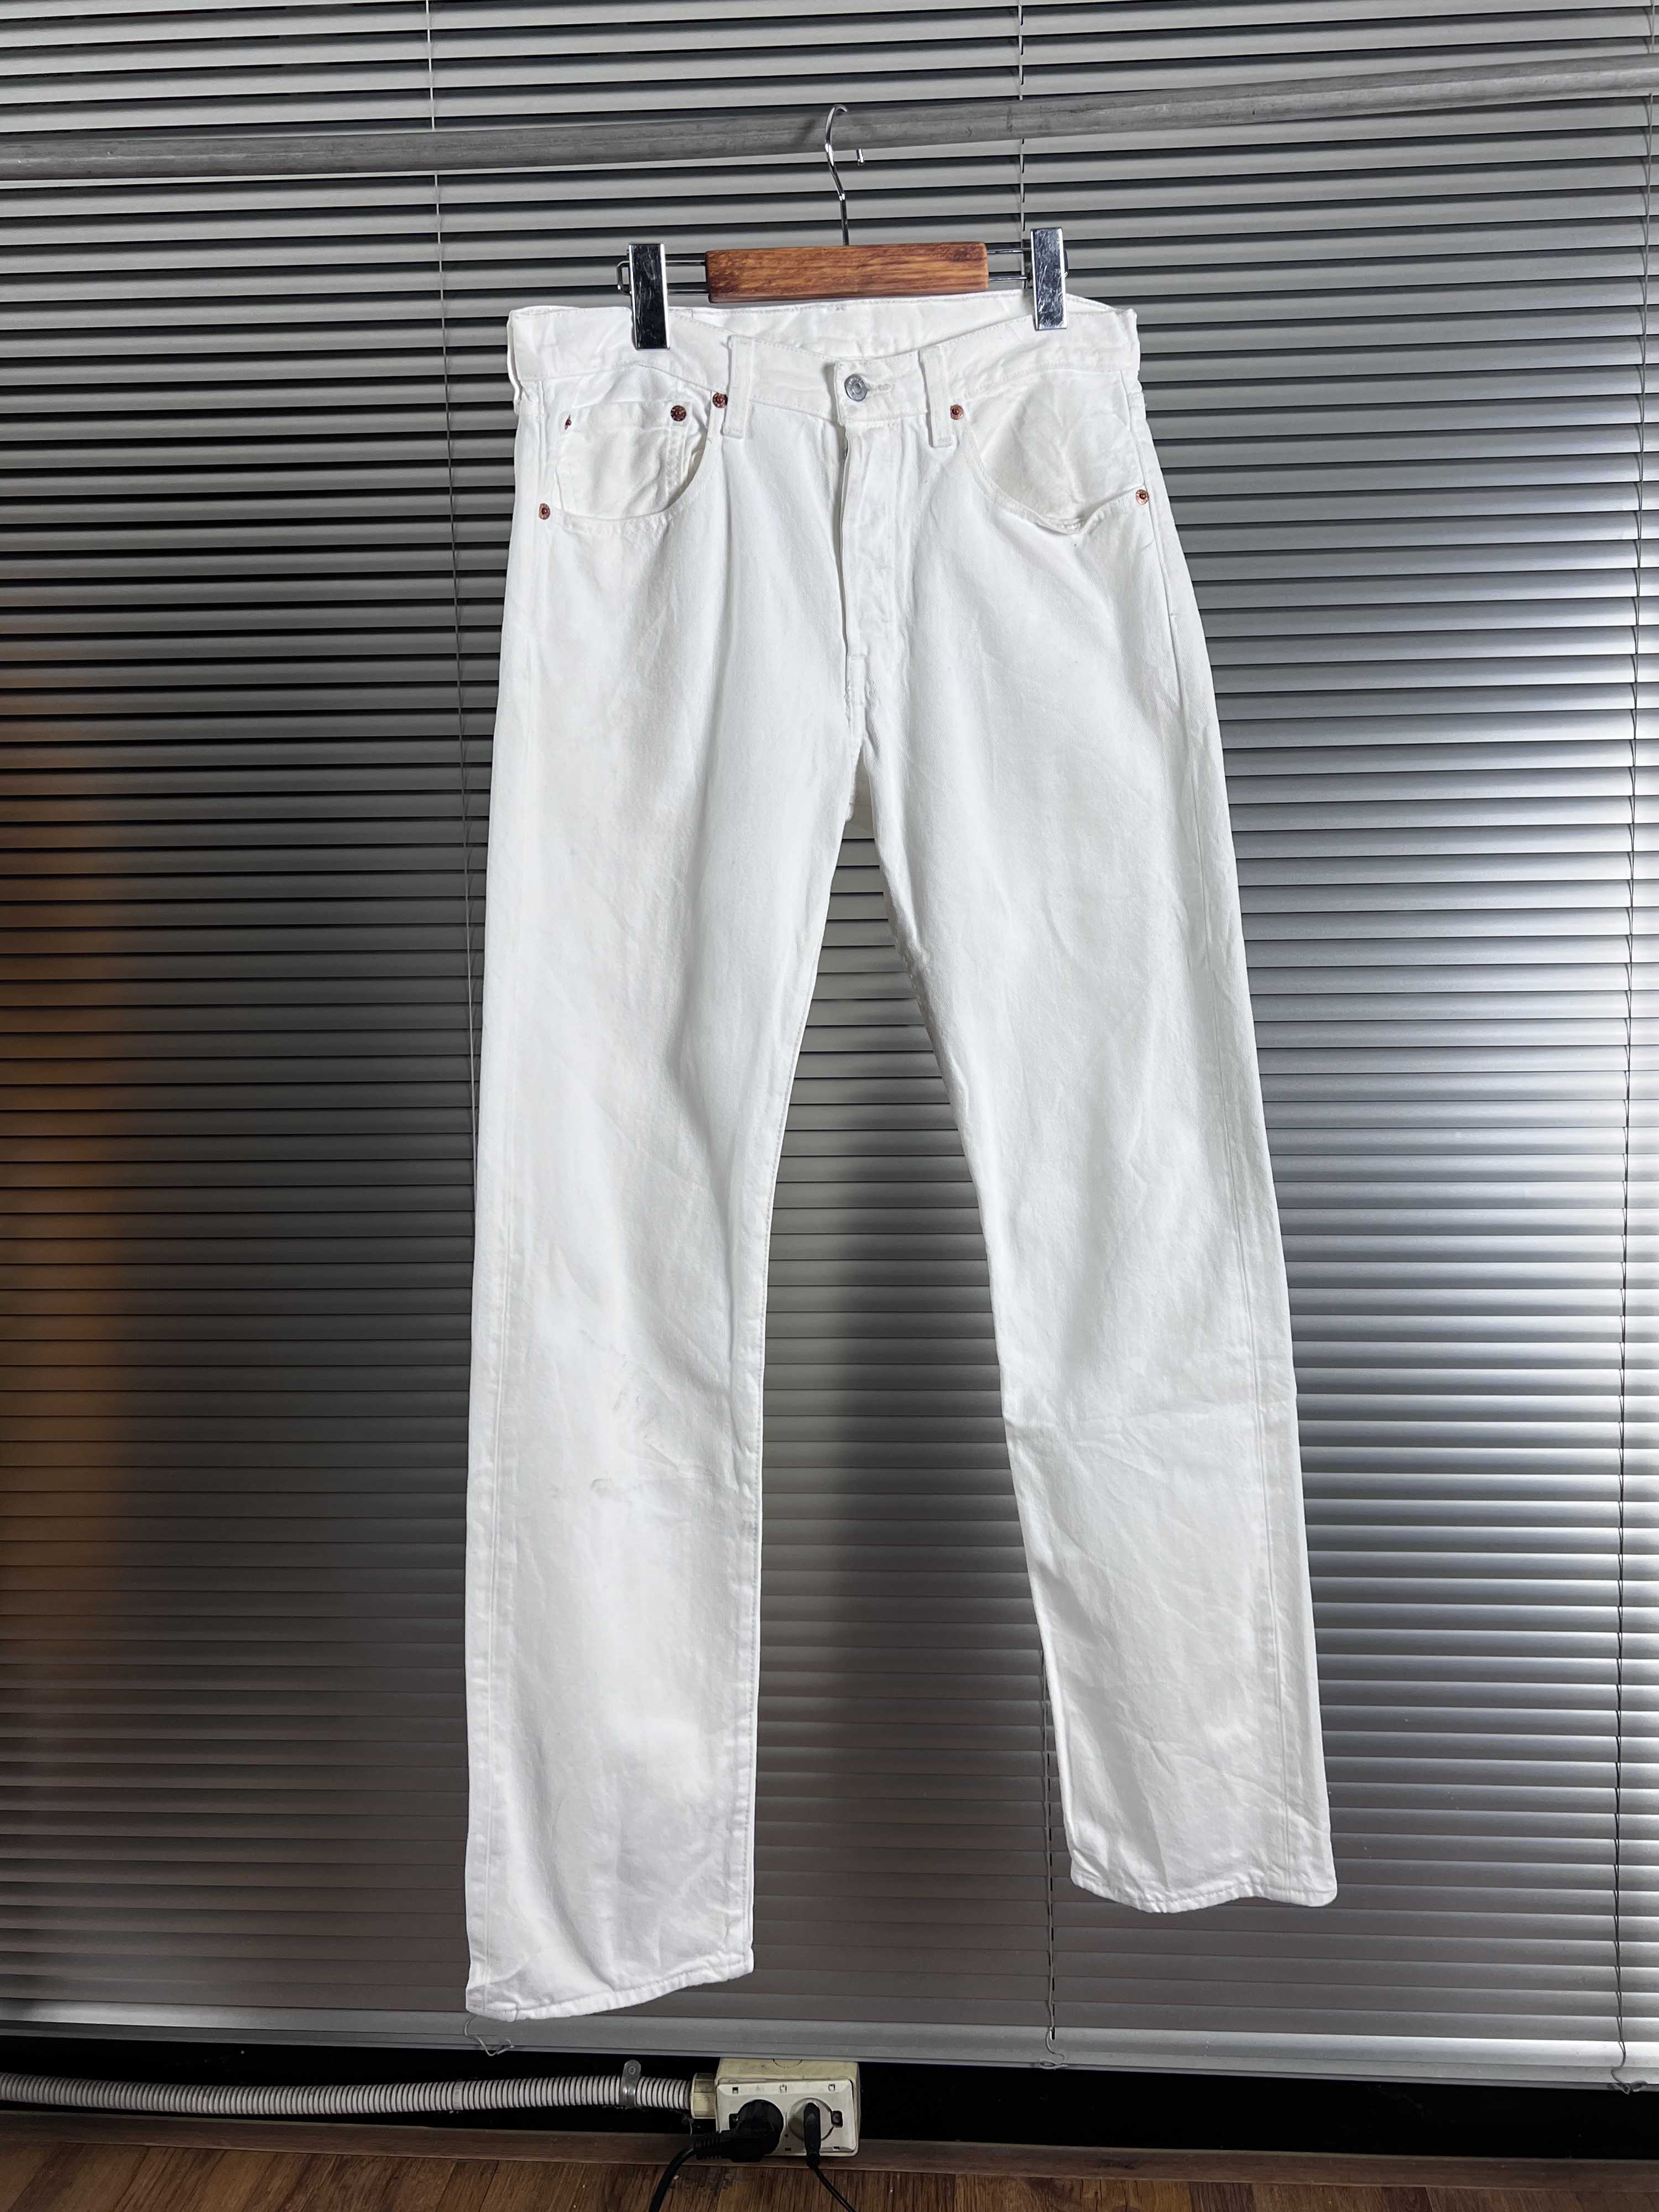 Levis 501 white jean